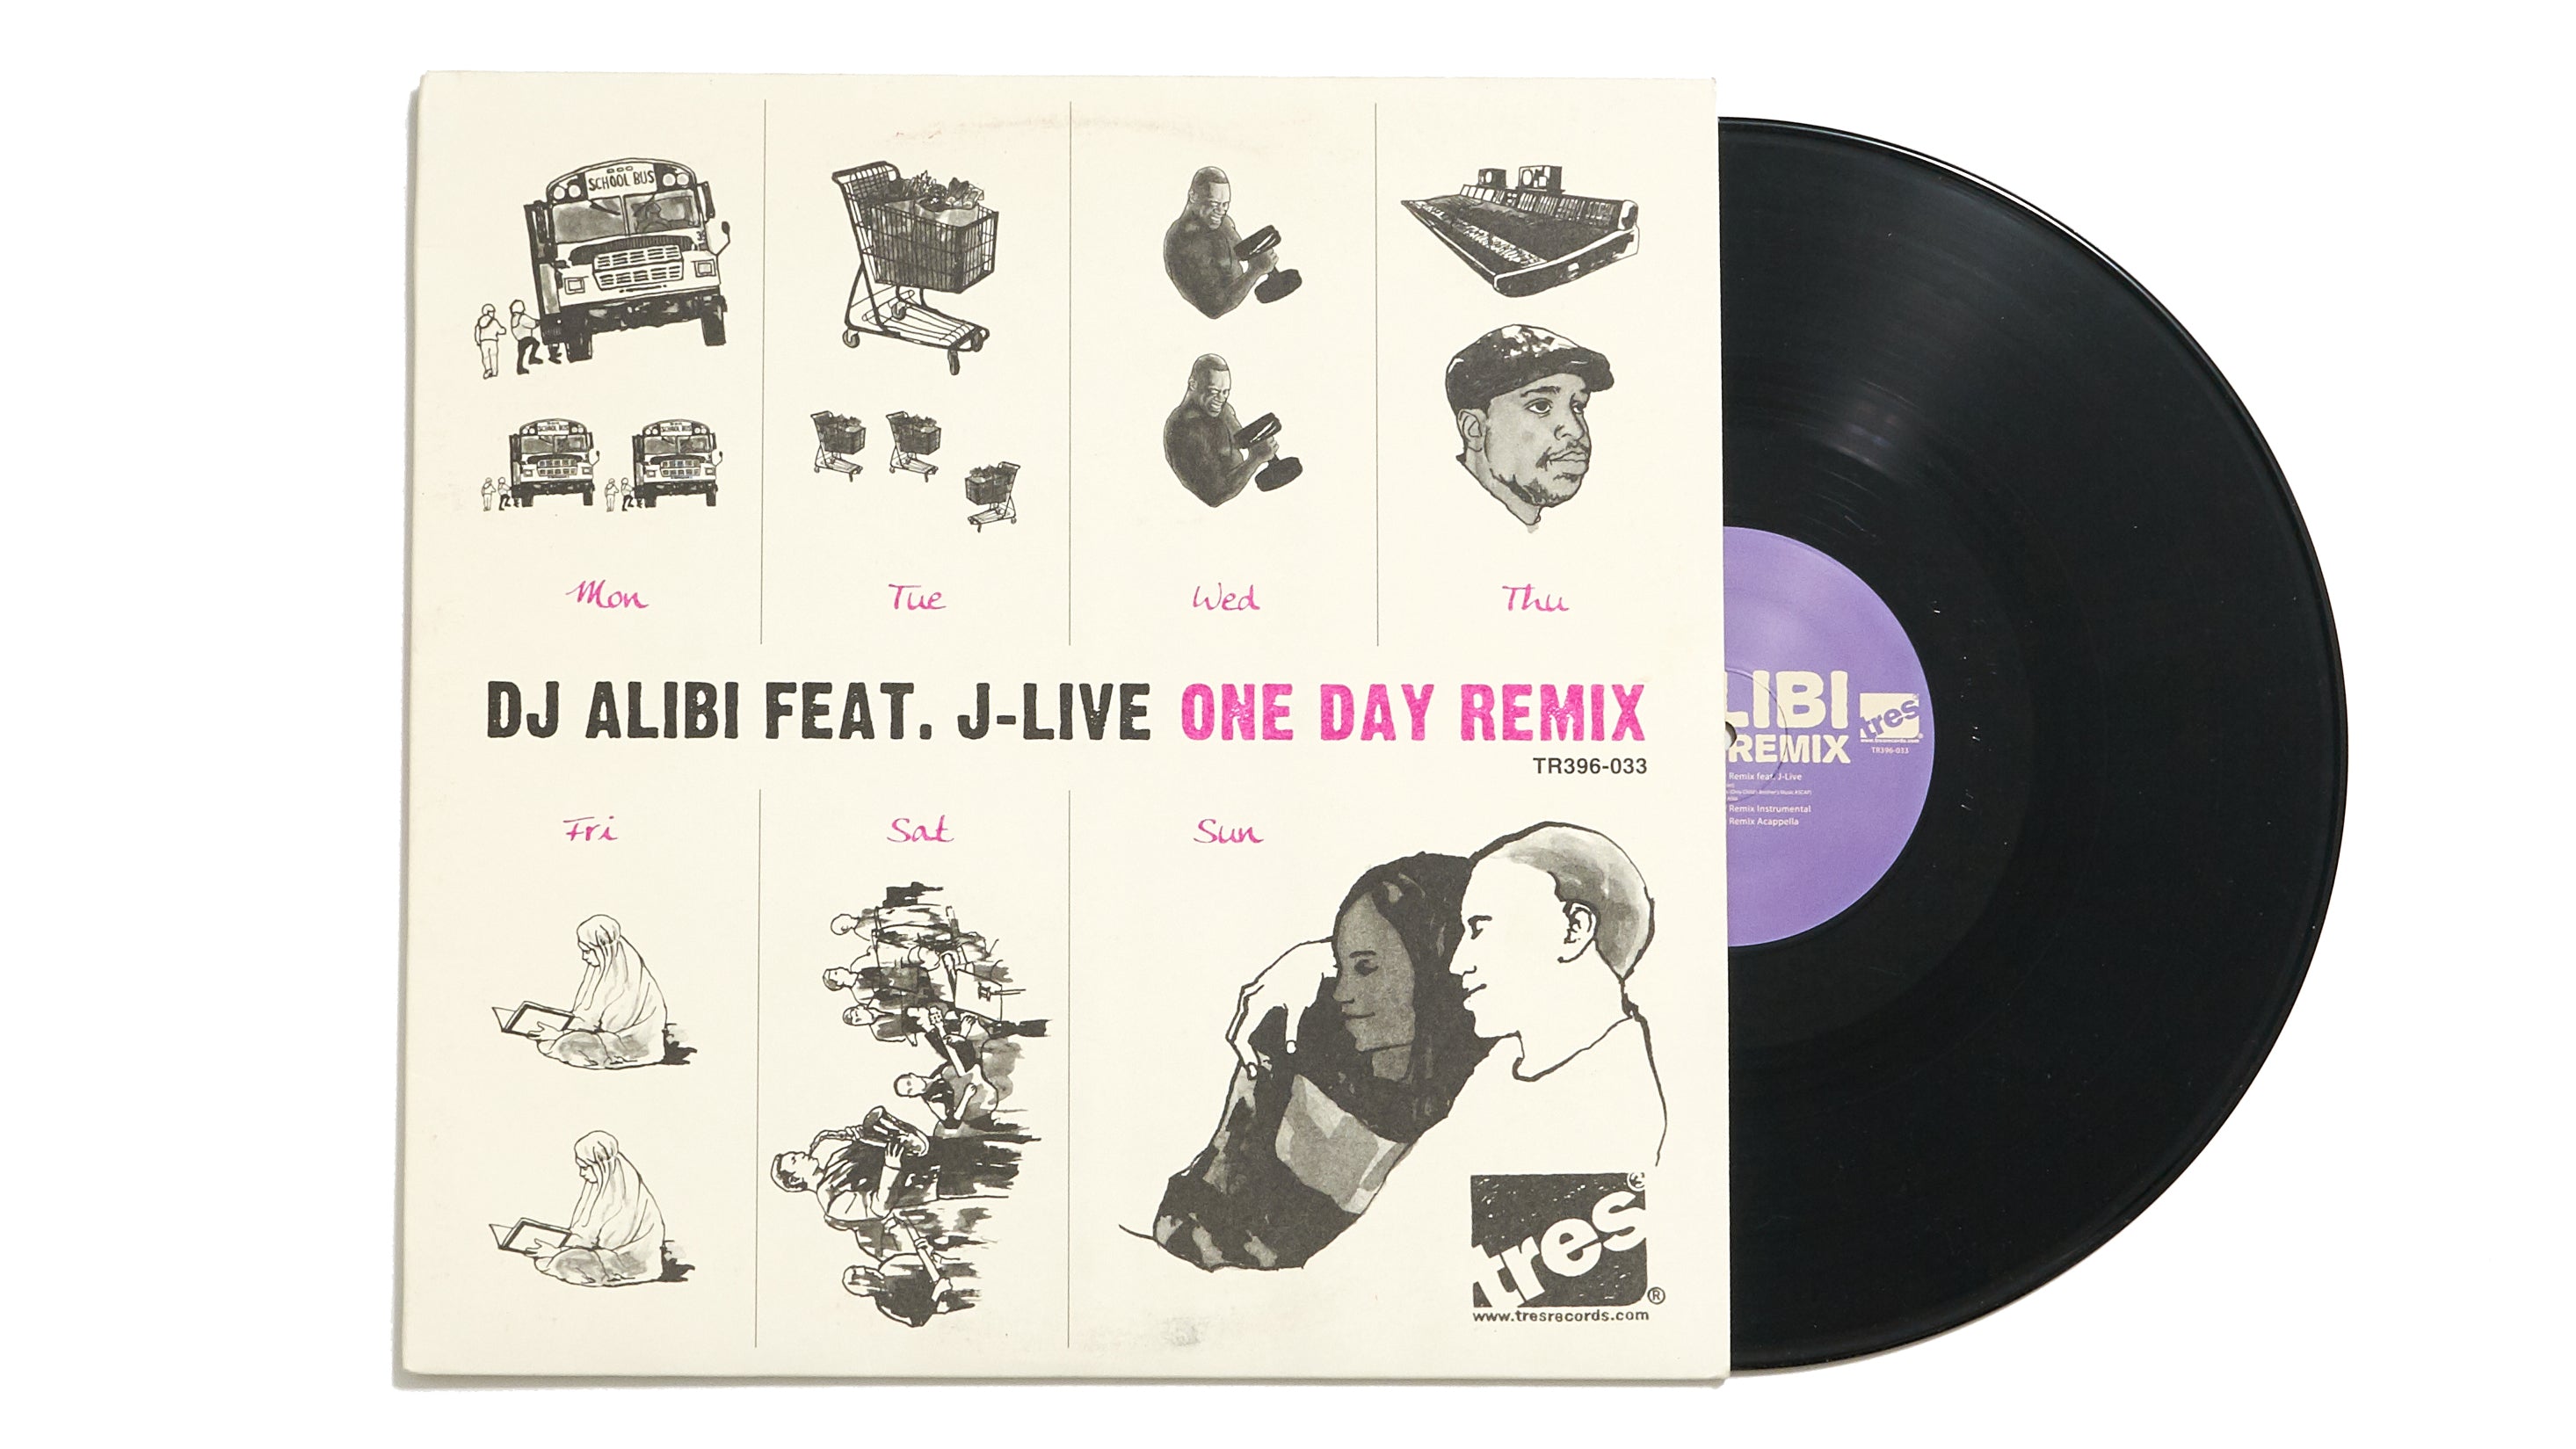 DJ Alibi "One Day Remix feat. J-Live" (12")